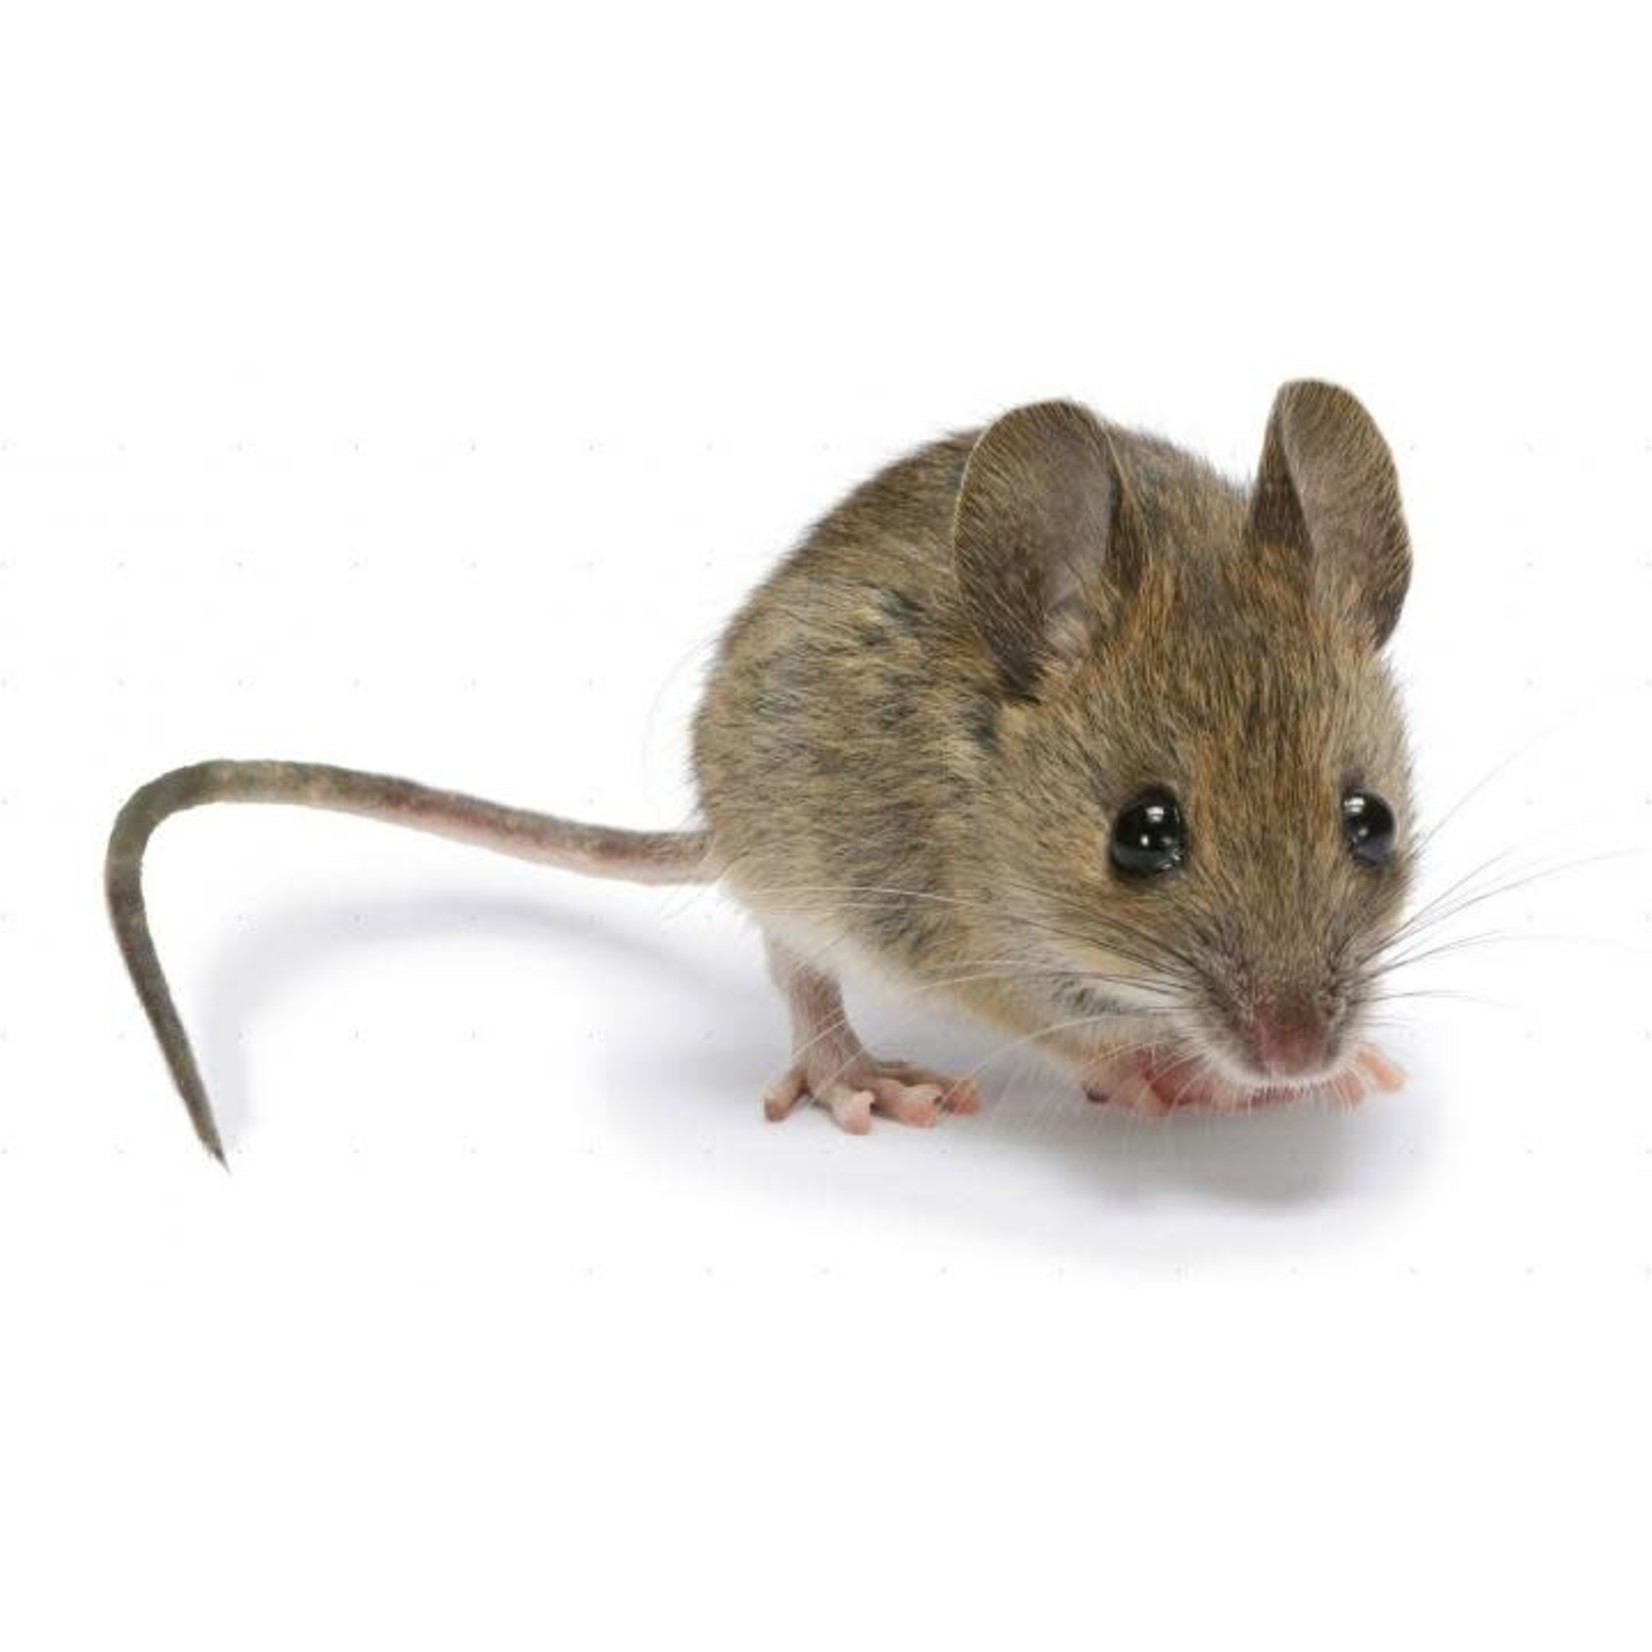 25 Adult Mice 24-30gm